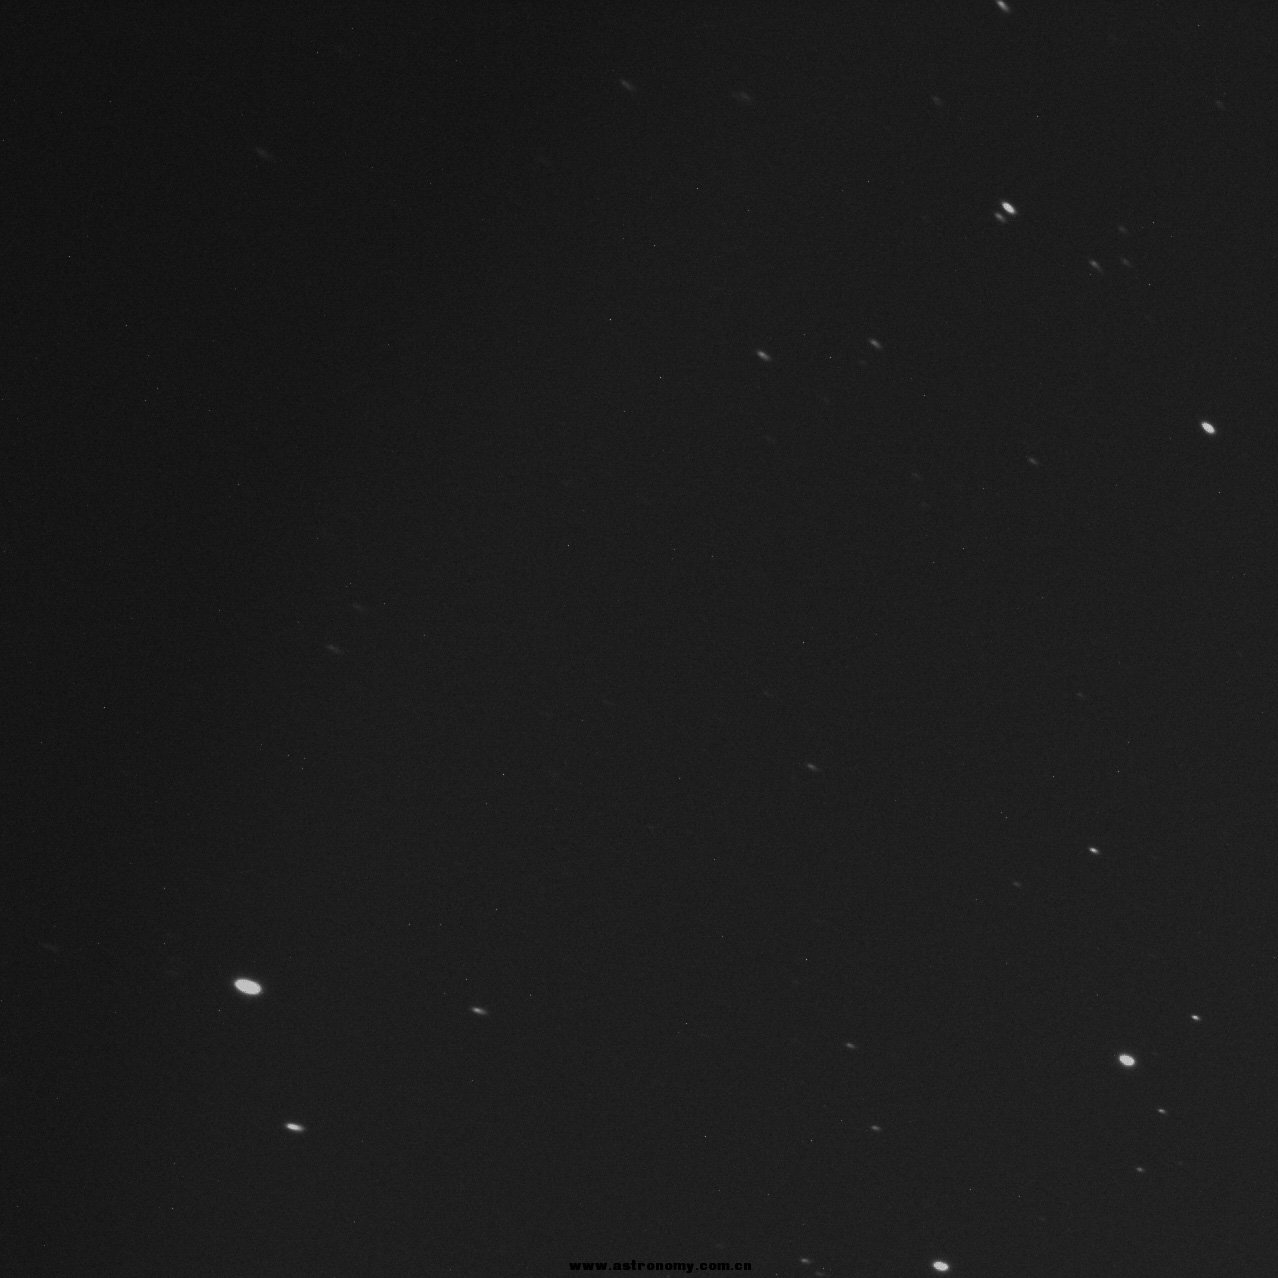 001102-M3-bw-星点-左上.jpg